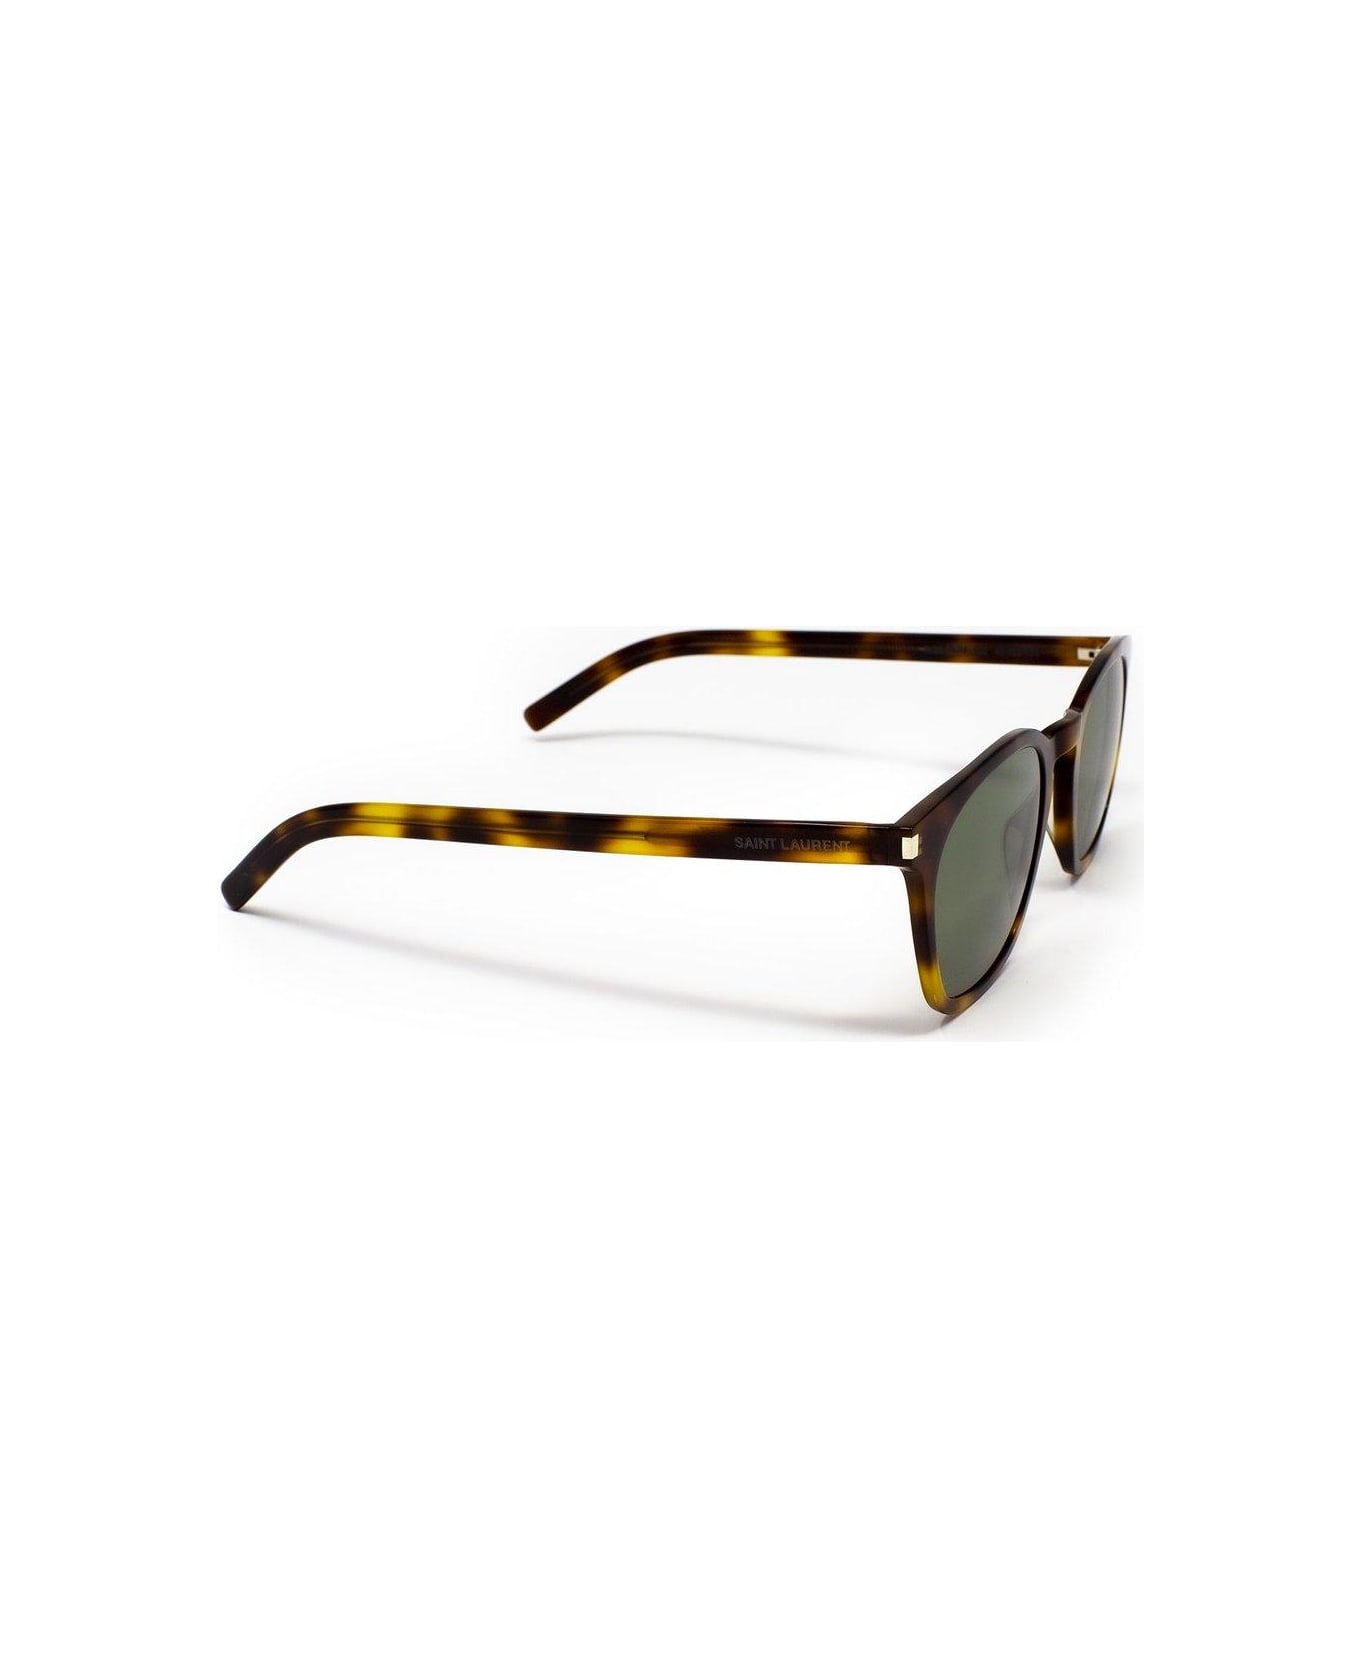 Saint Laurent Eyewear Wellington Sunglasses Sunglasses - 002 HAVANA HAVANA GREEN